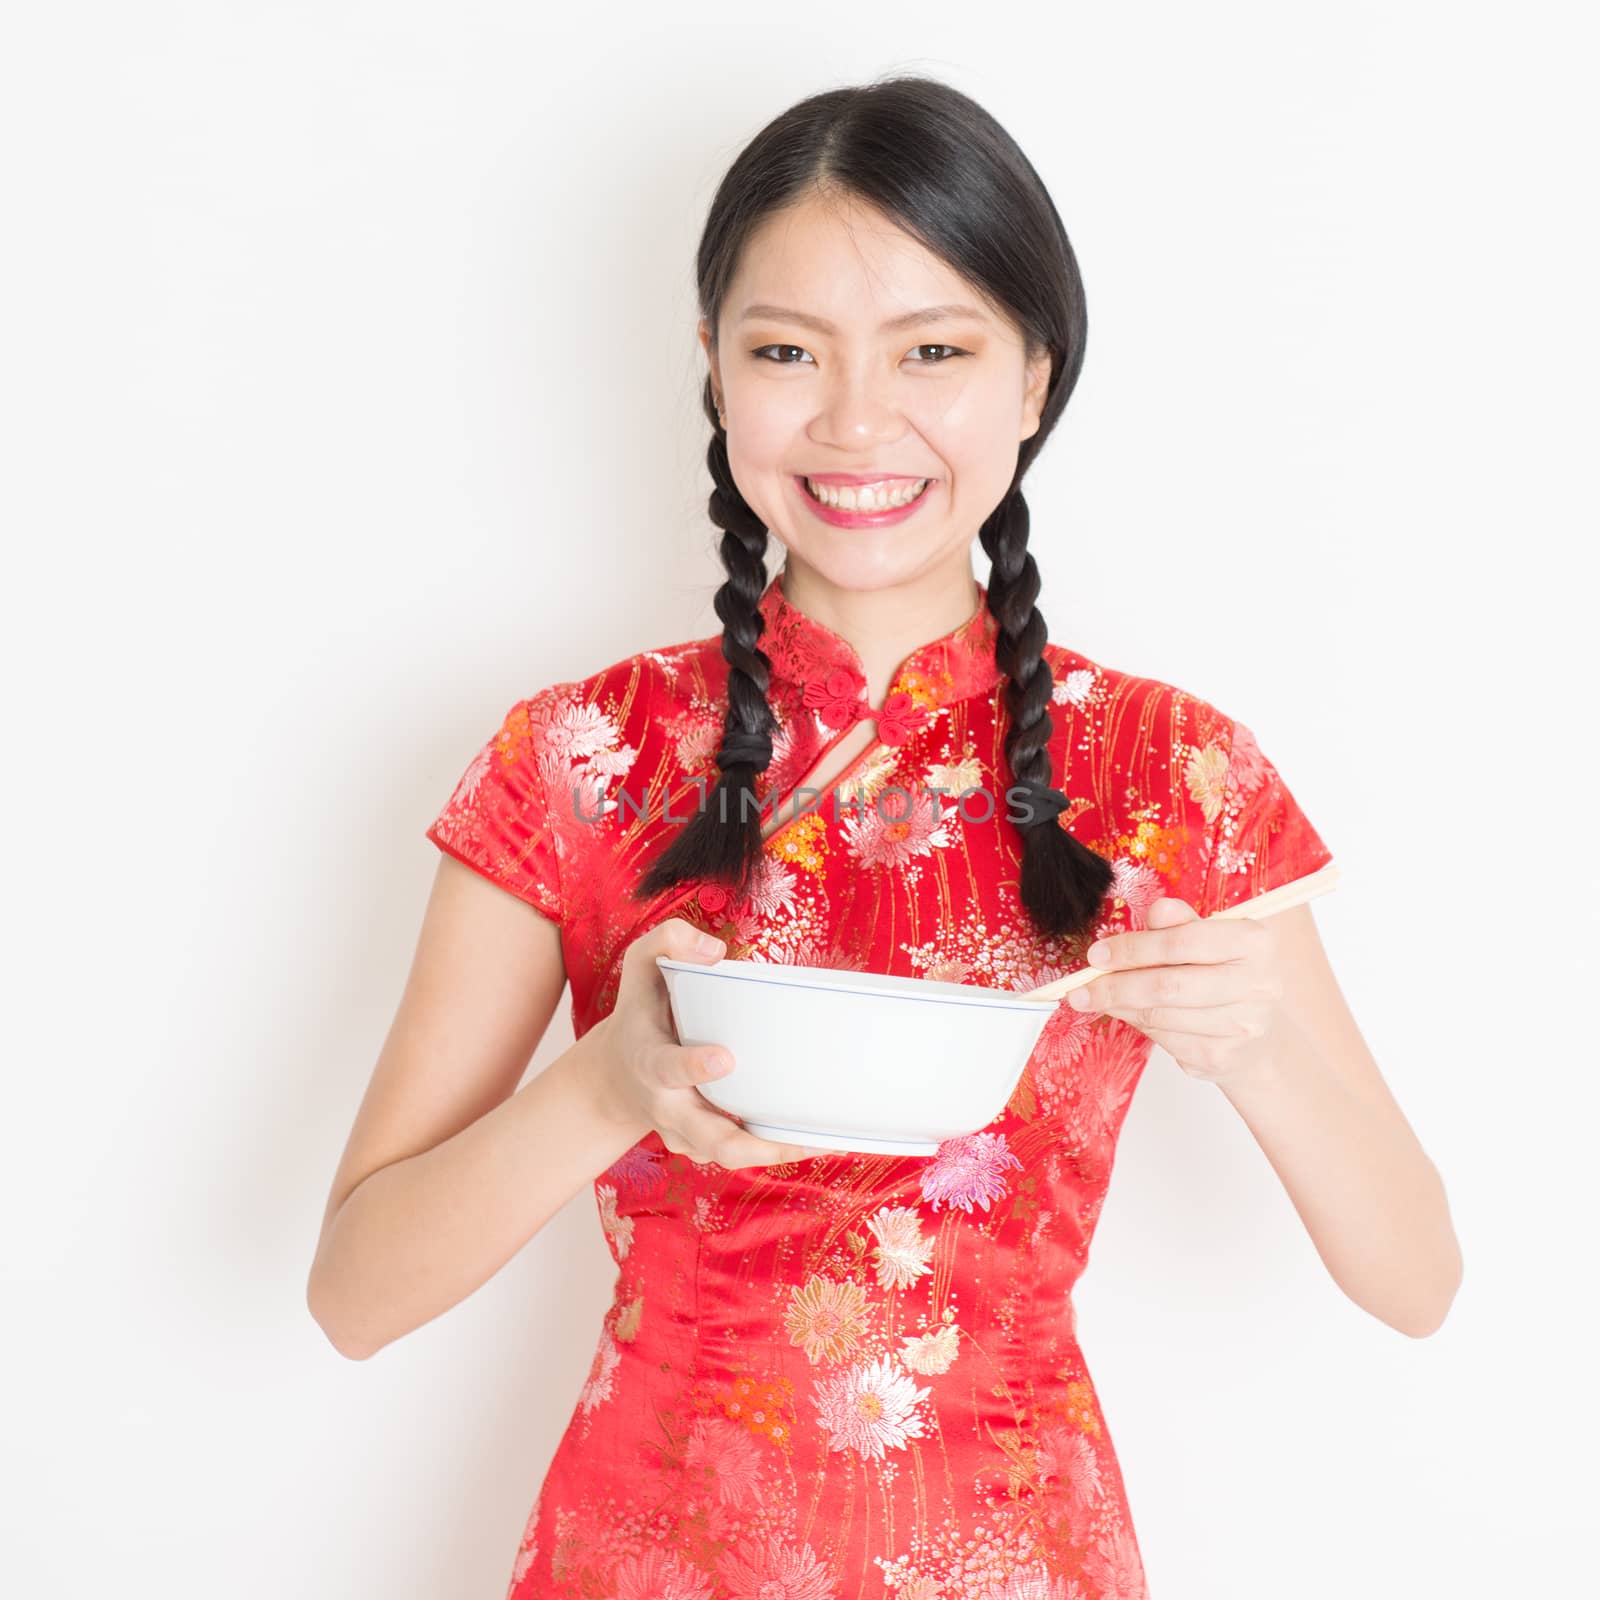 Oriental female in red cheongsam eating with chopsticks by szefei